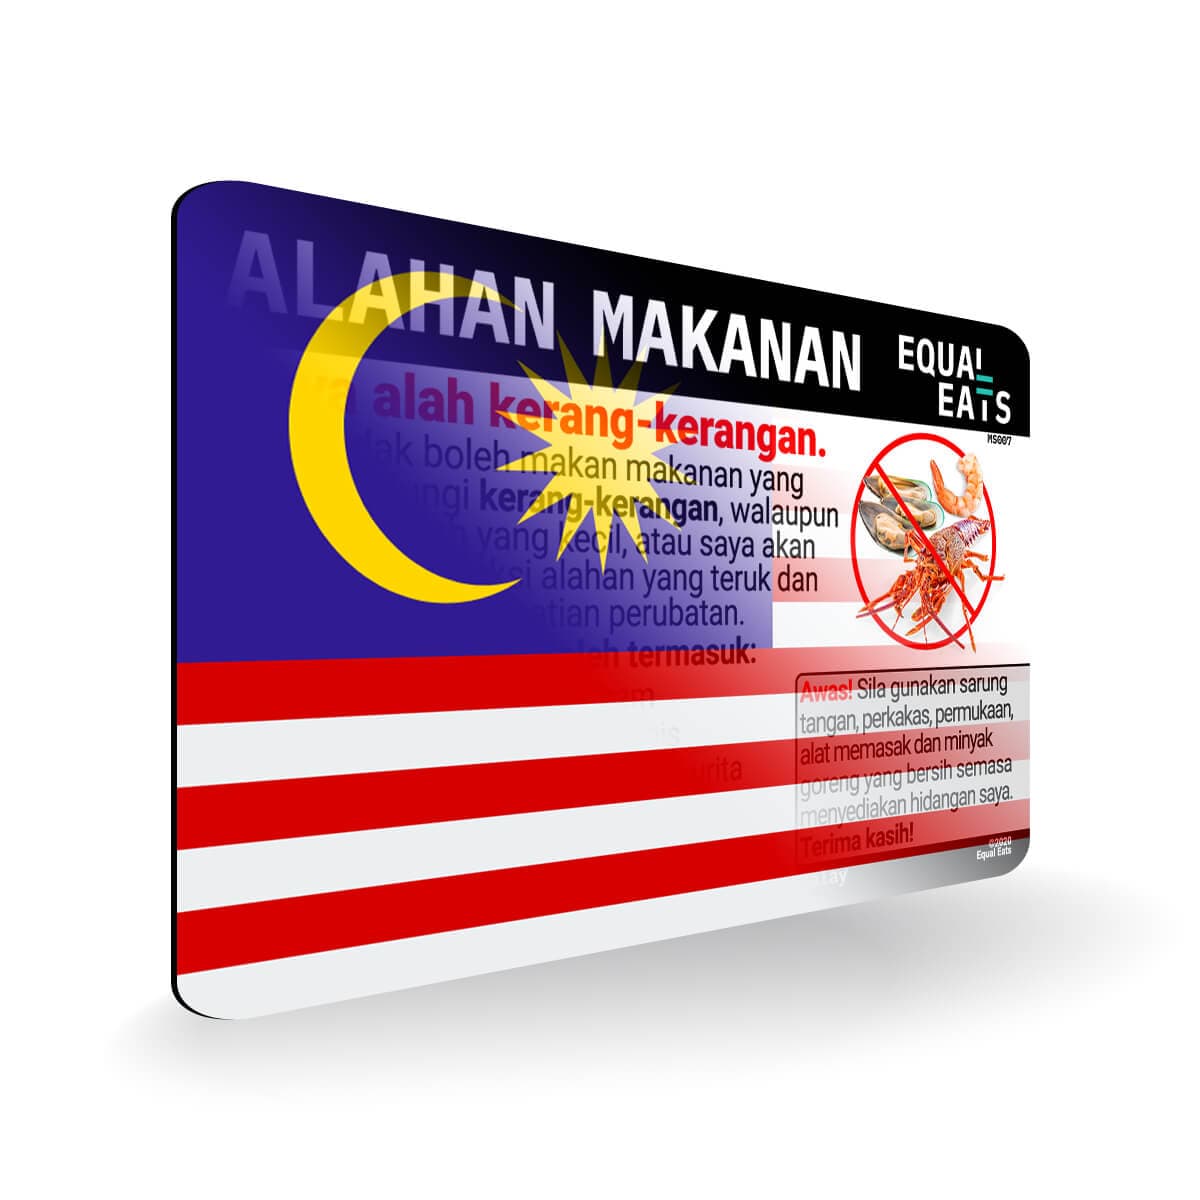 Shellfish Allergy in Malay. Shellfish Allergy Card for Malaysia